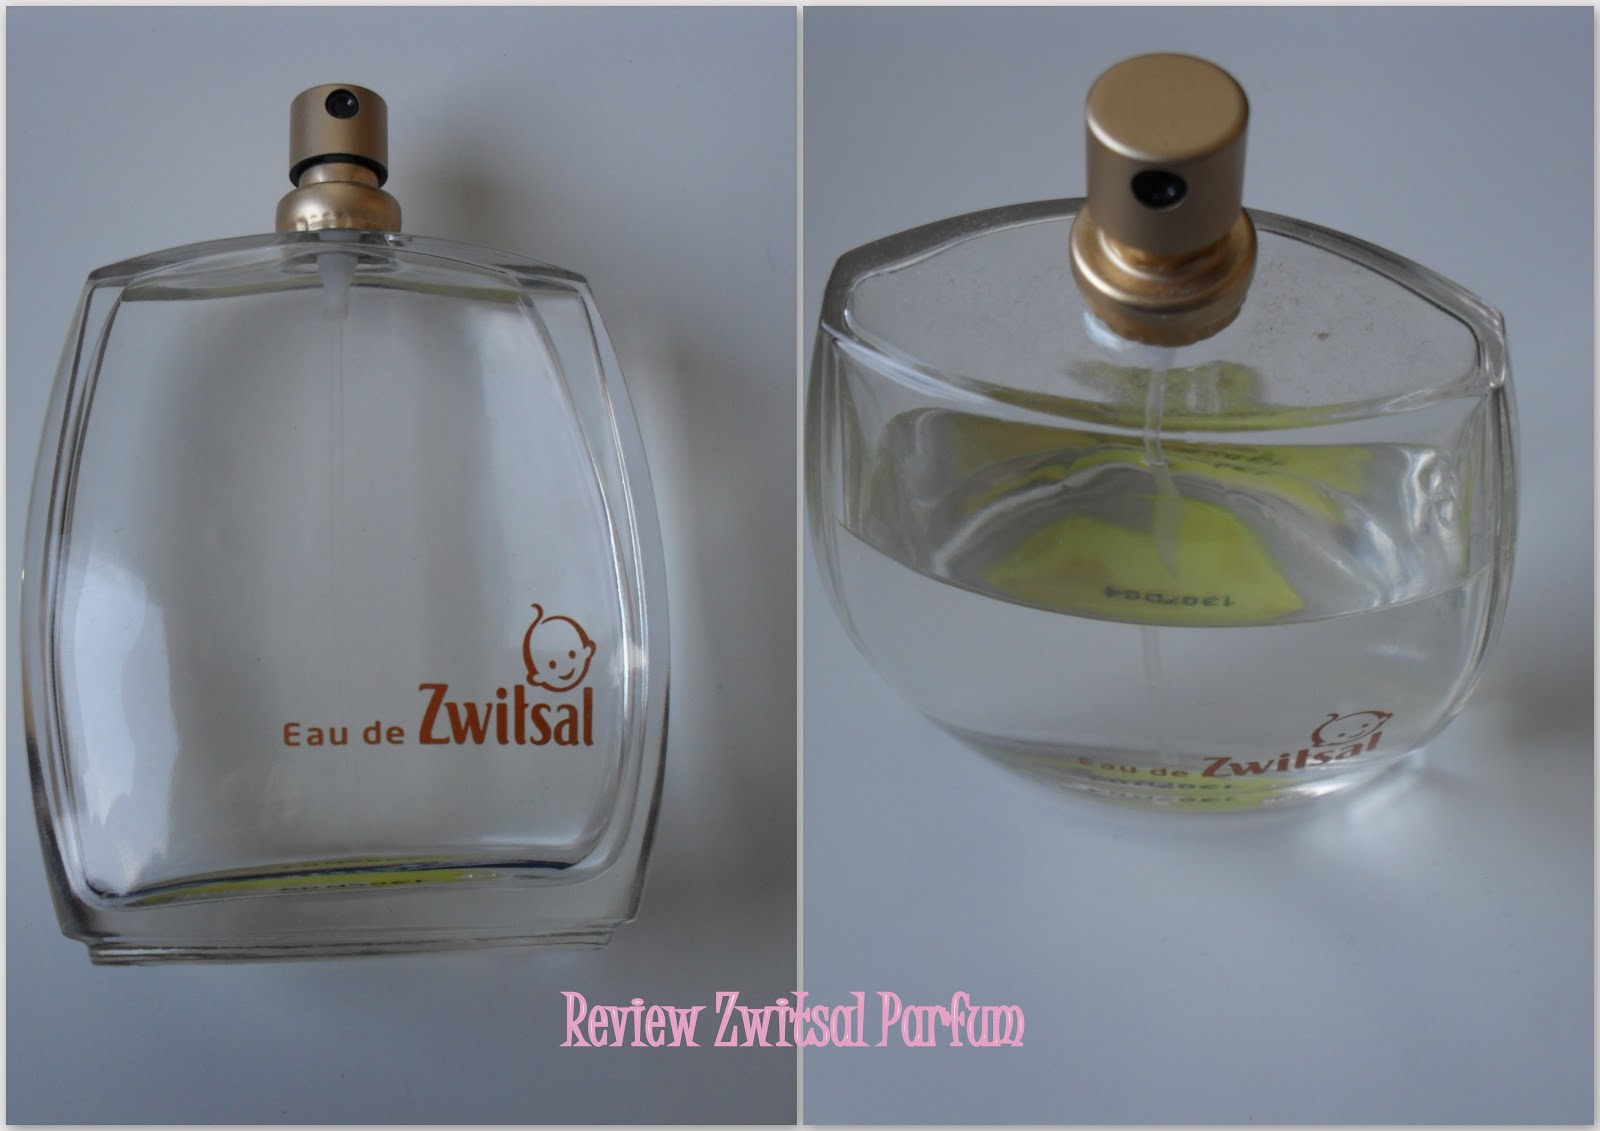 Fashion Lifestyle: Review Zwitsal Parfum